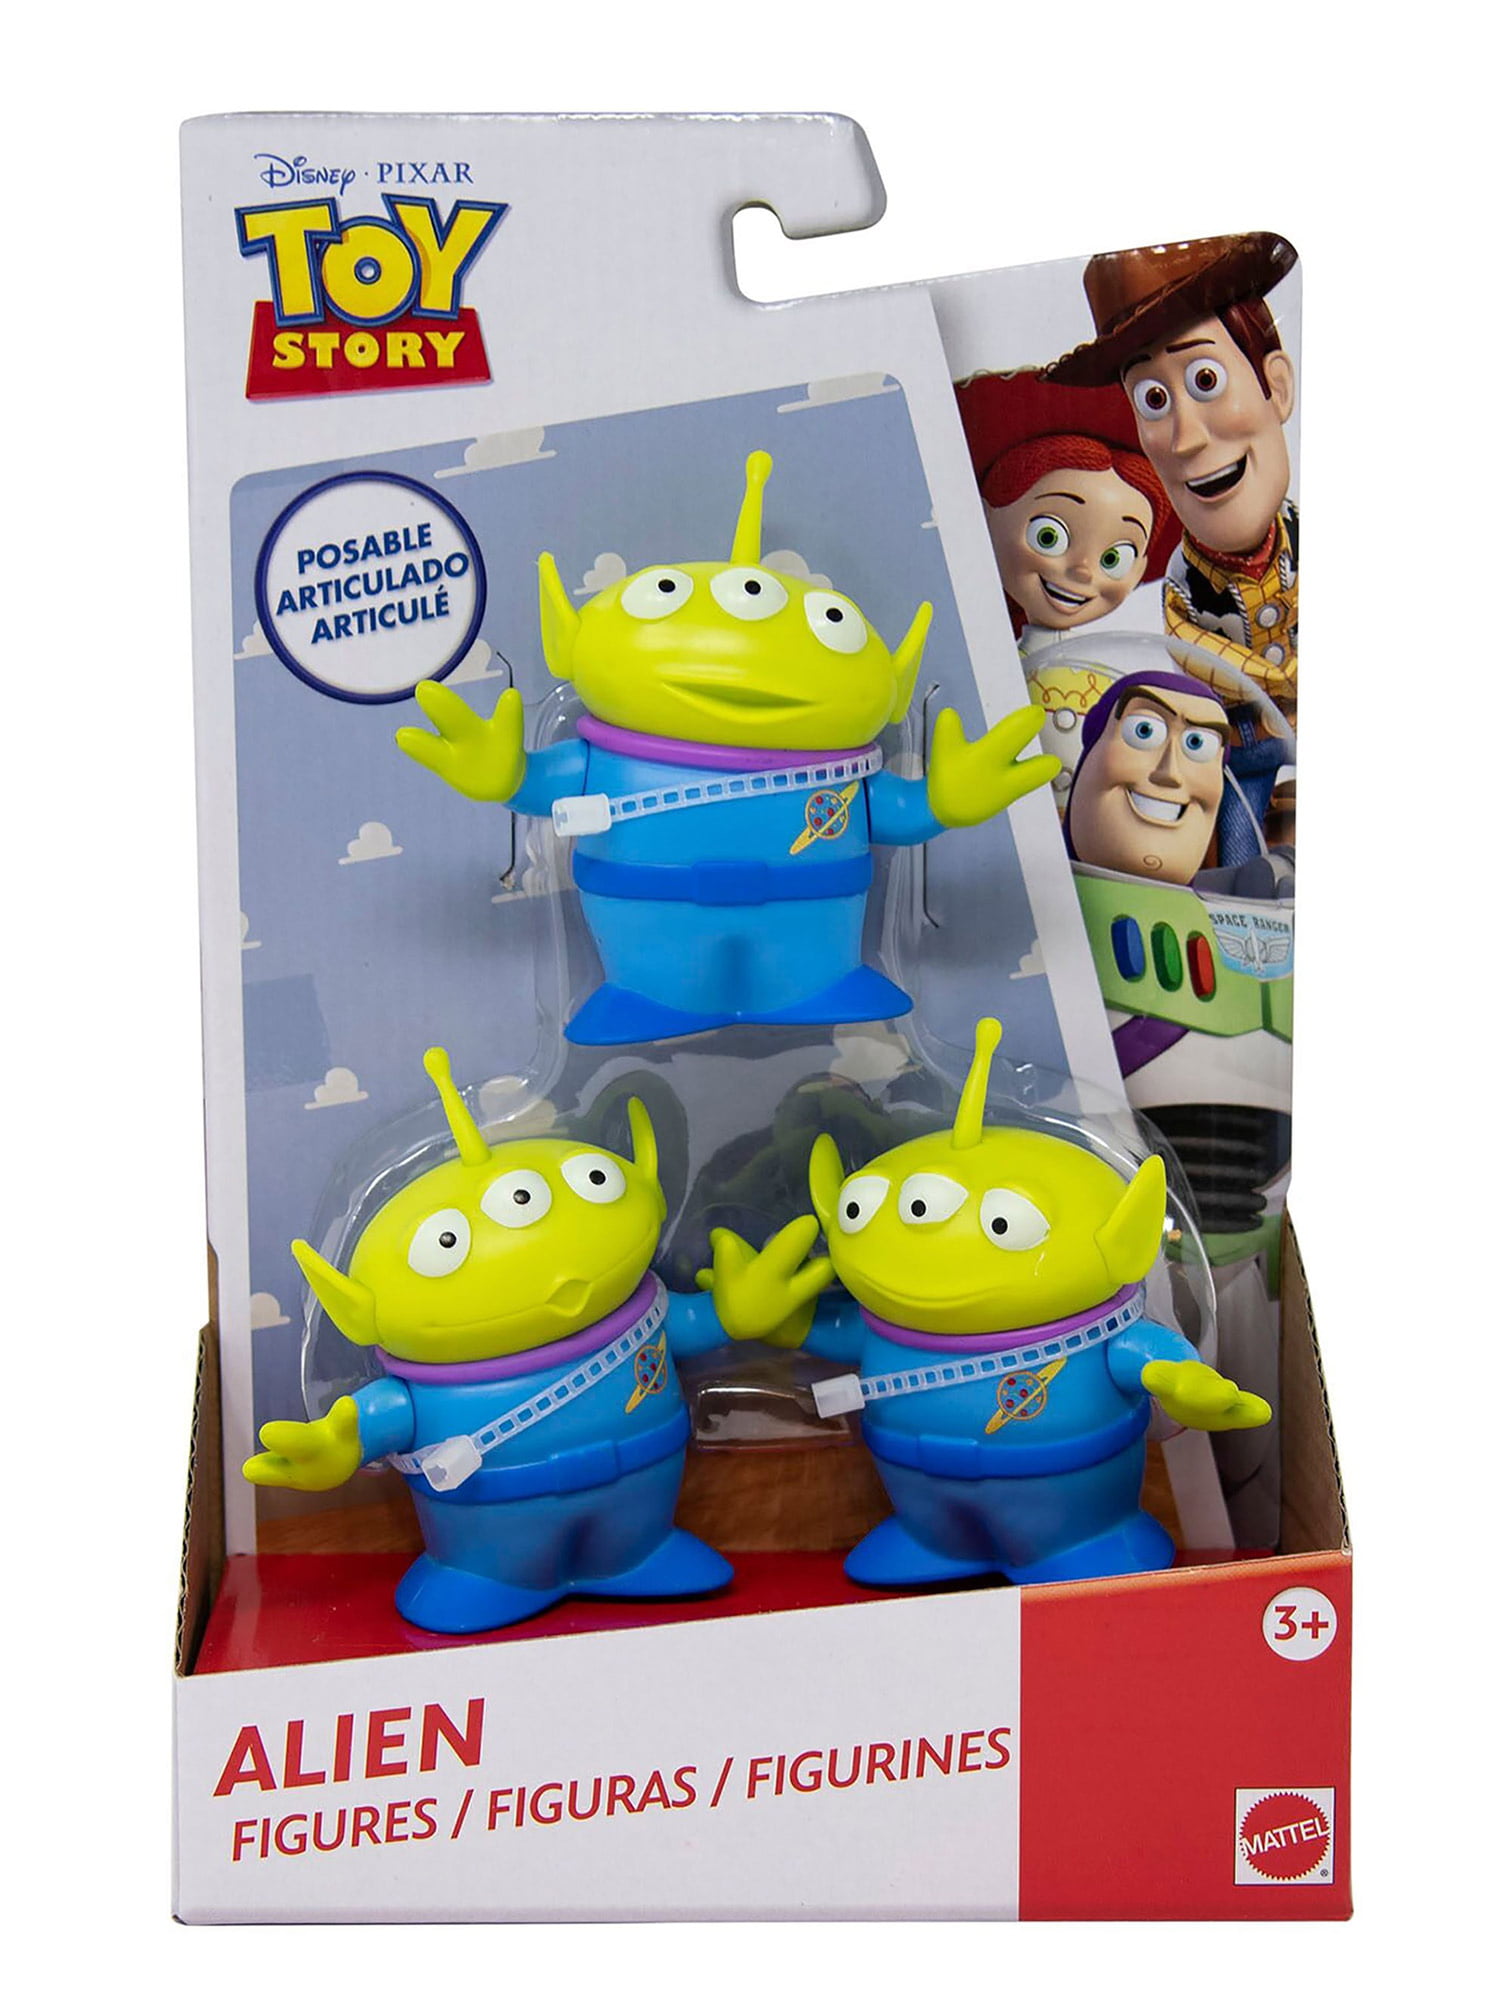 Toy Story Disney and Pixar Space Aliens Figures 3-Pack